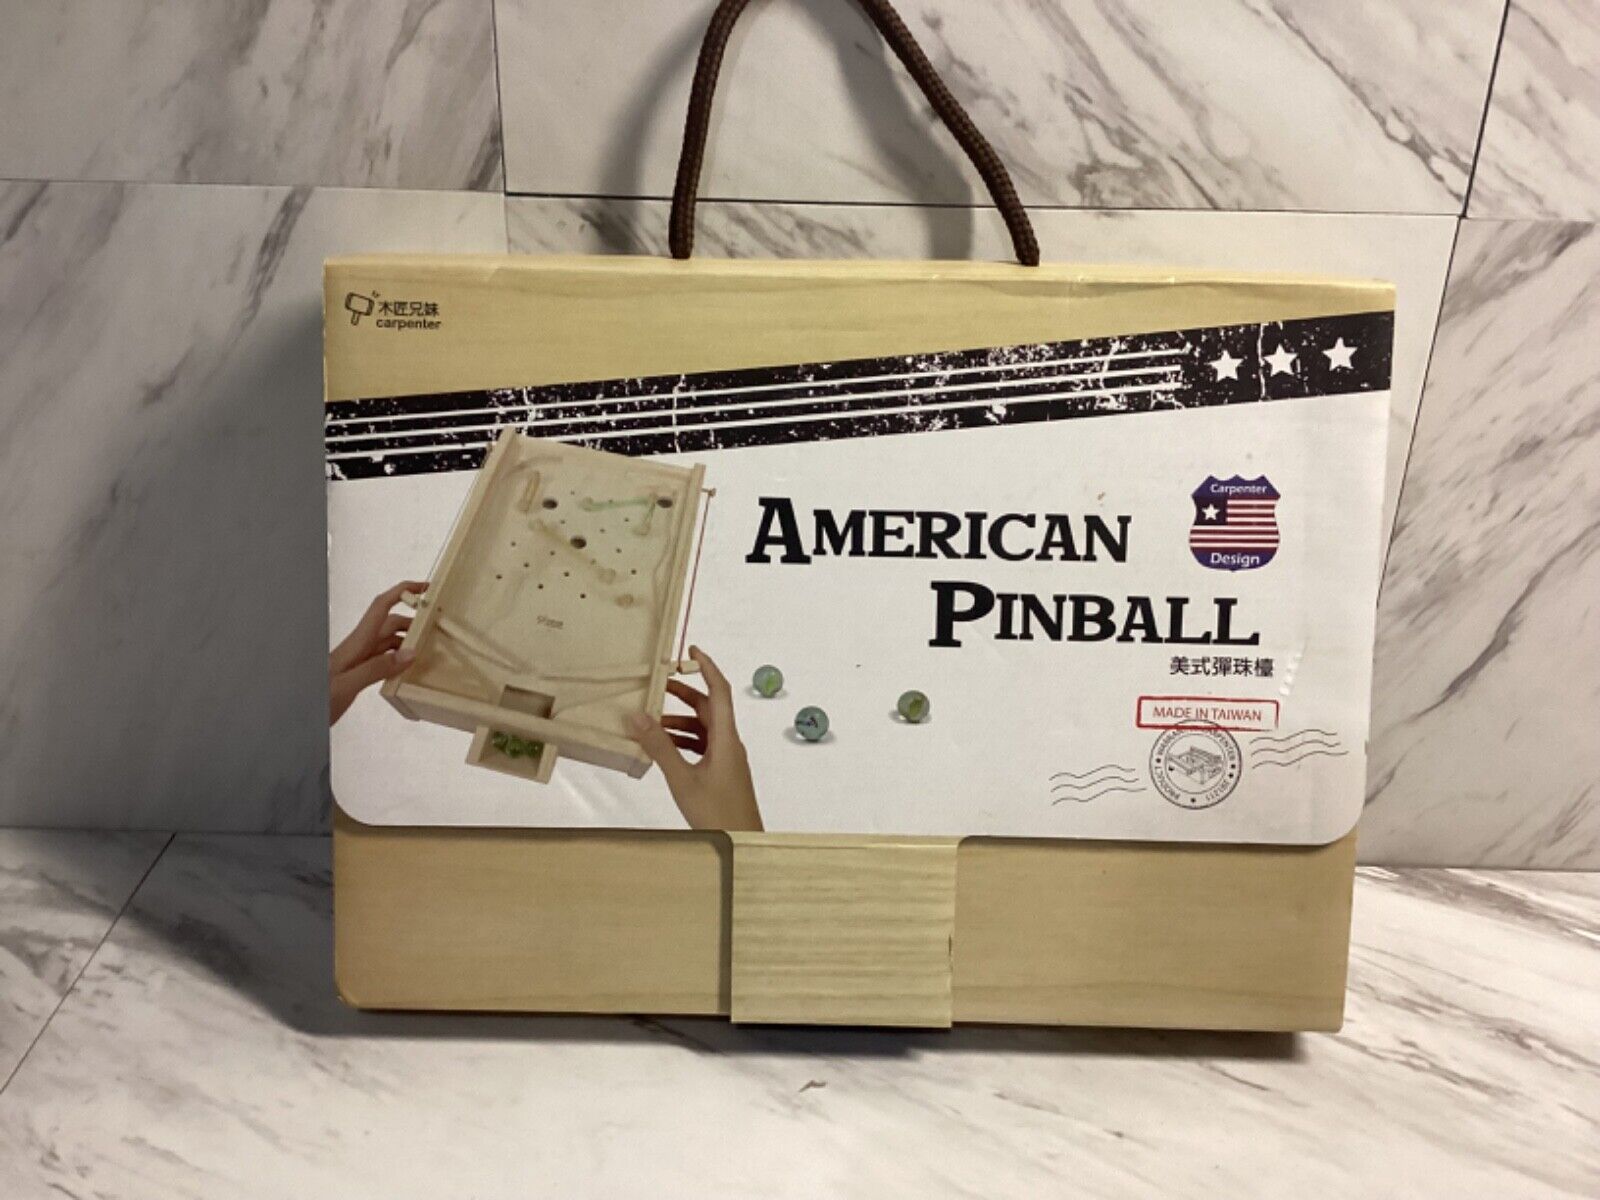 Carpenter design, American pinball made in Taiwan Без бренда